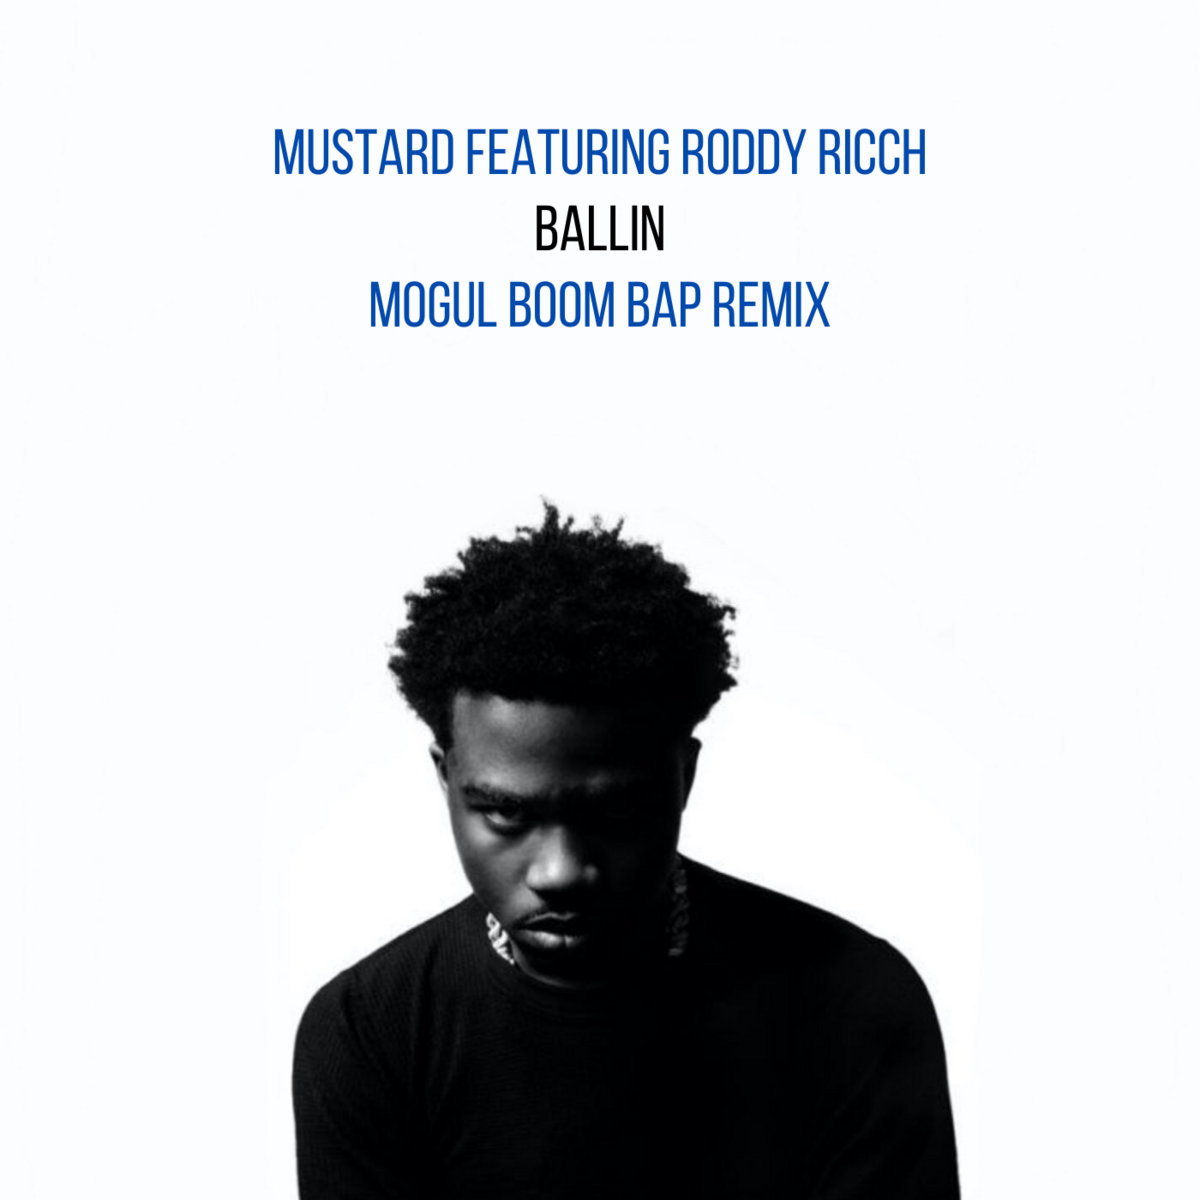 Ballin Mustard, Roddy Ricch. Roddy Ricch - Ballin. Mustard - Ballin (Lyrics) feat. Roddy Ricch. :Ballin by Roddy Ricch. Mustard ballin